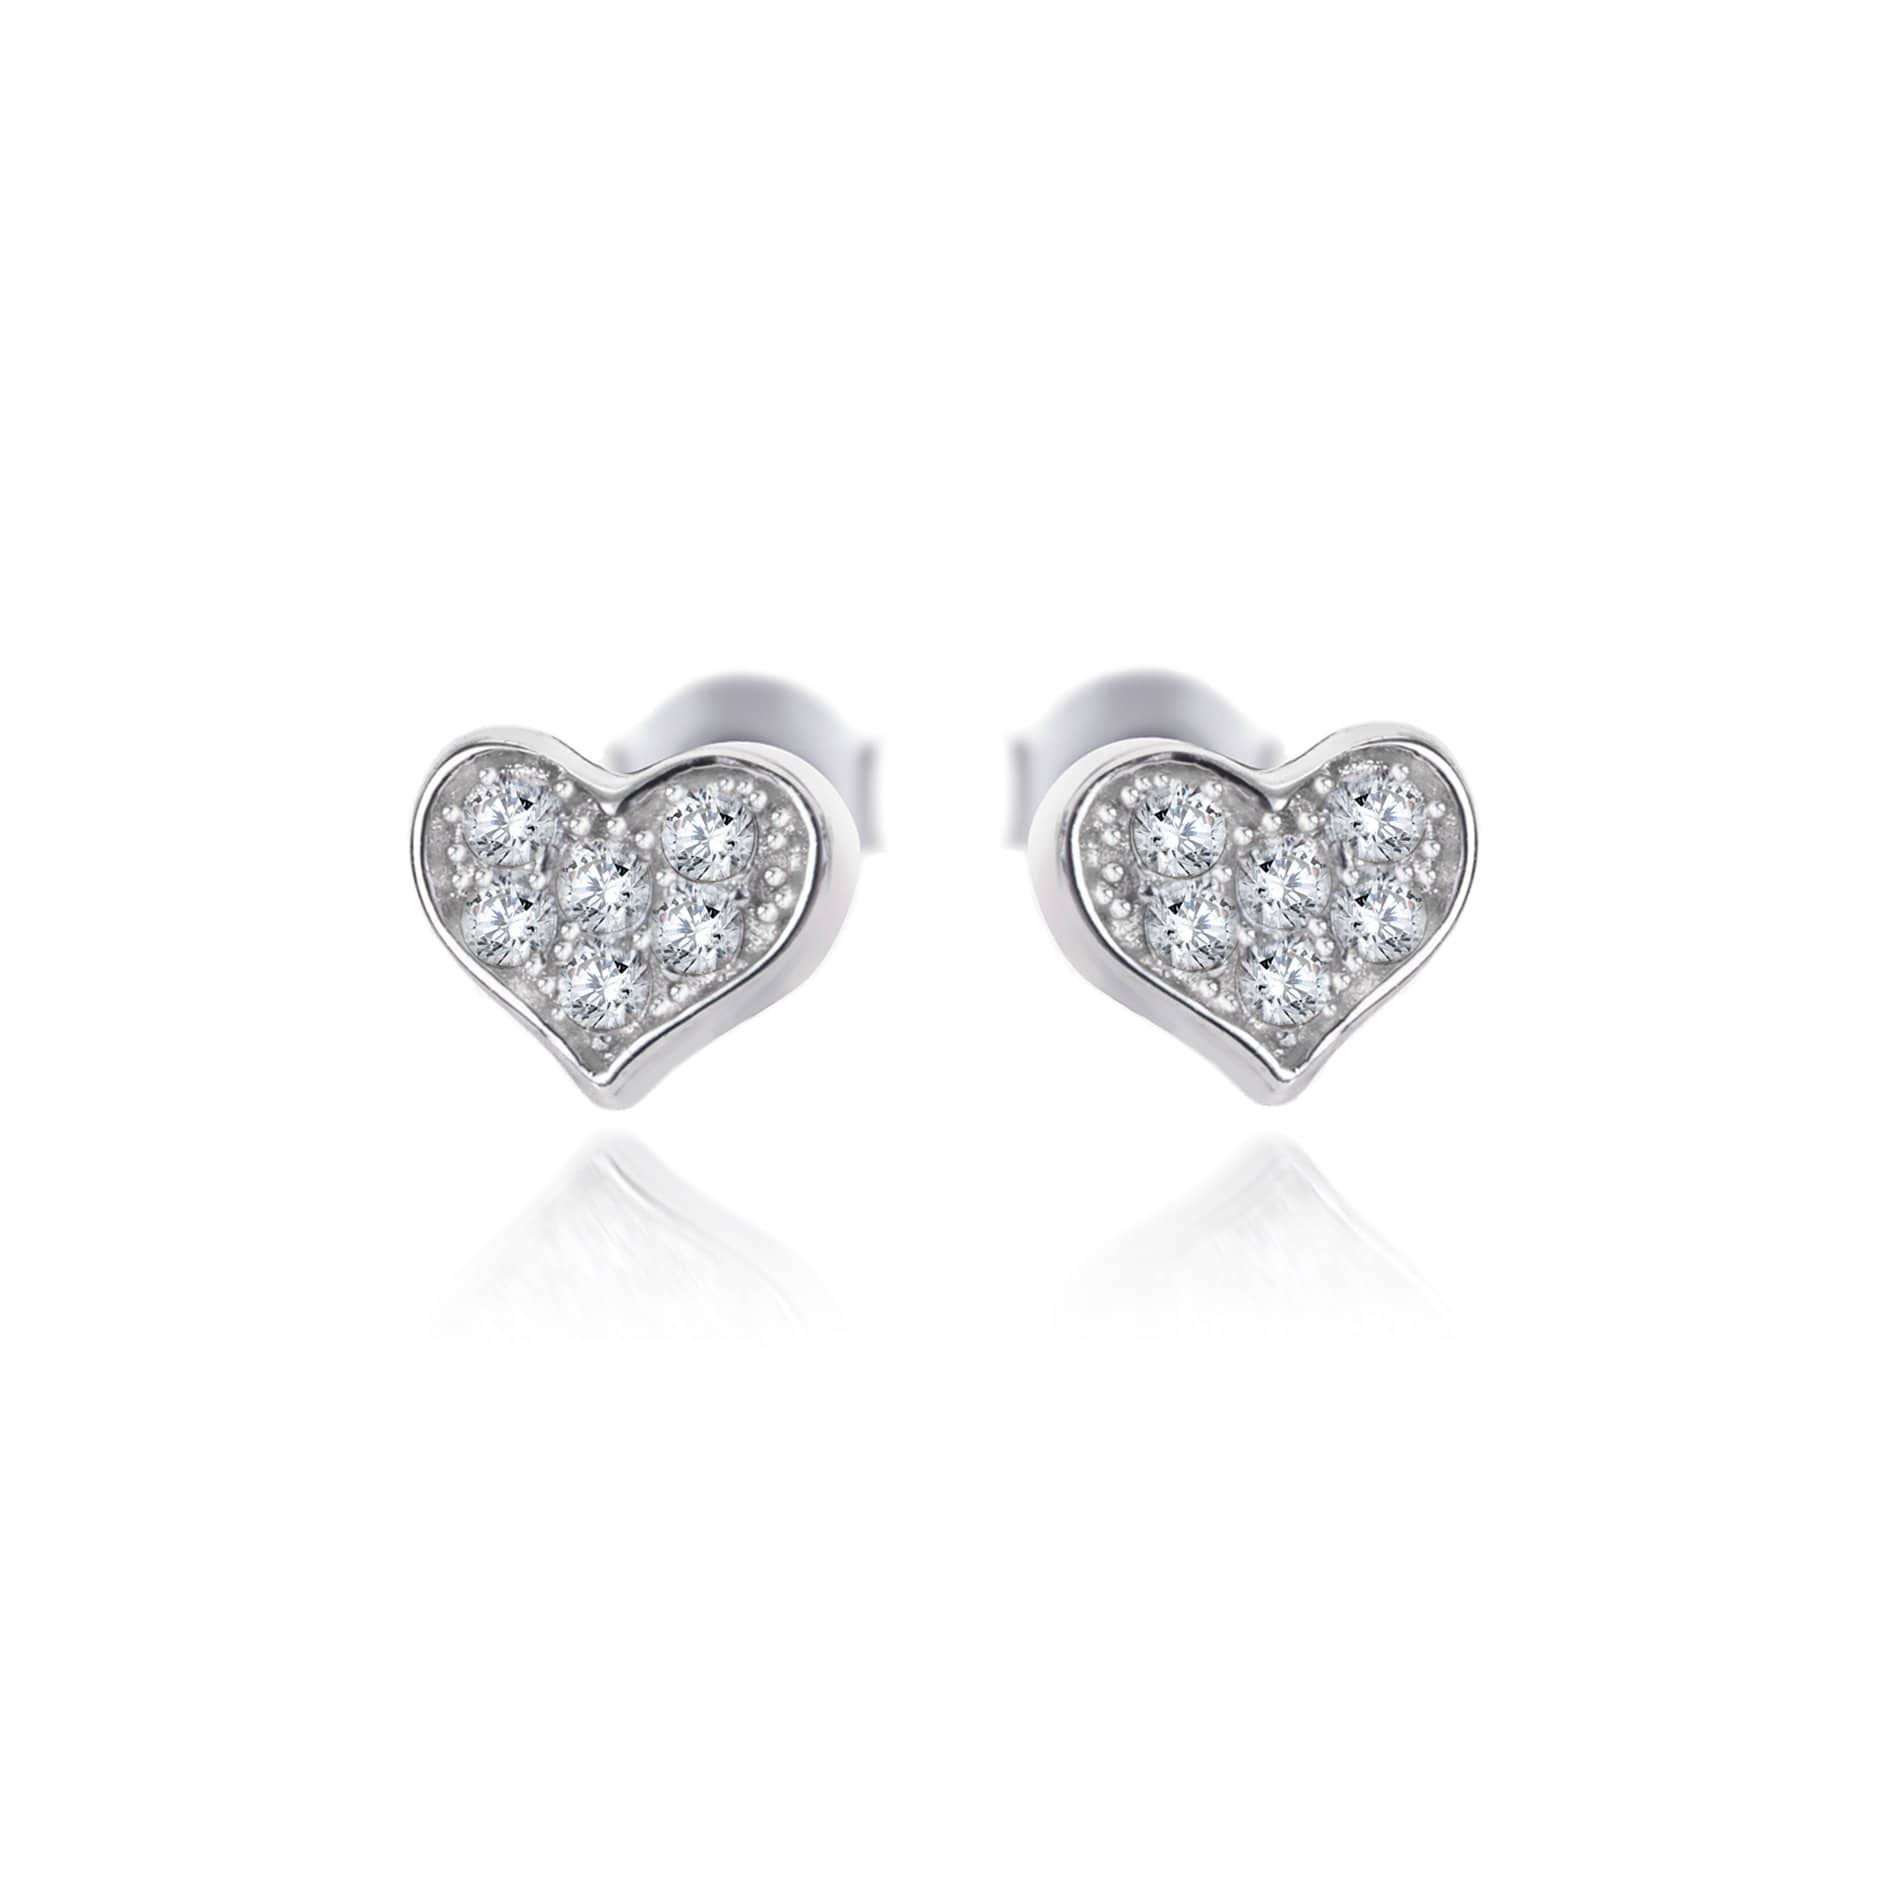 Lynora Jewellery Earring Sterling Silver Petite Heart Studs Sterling Silver